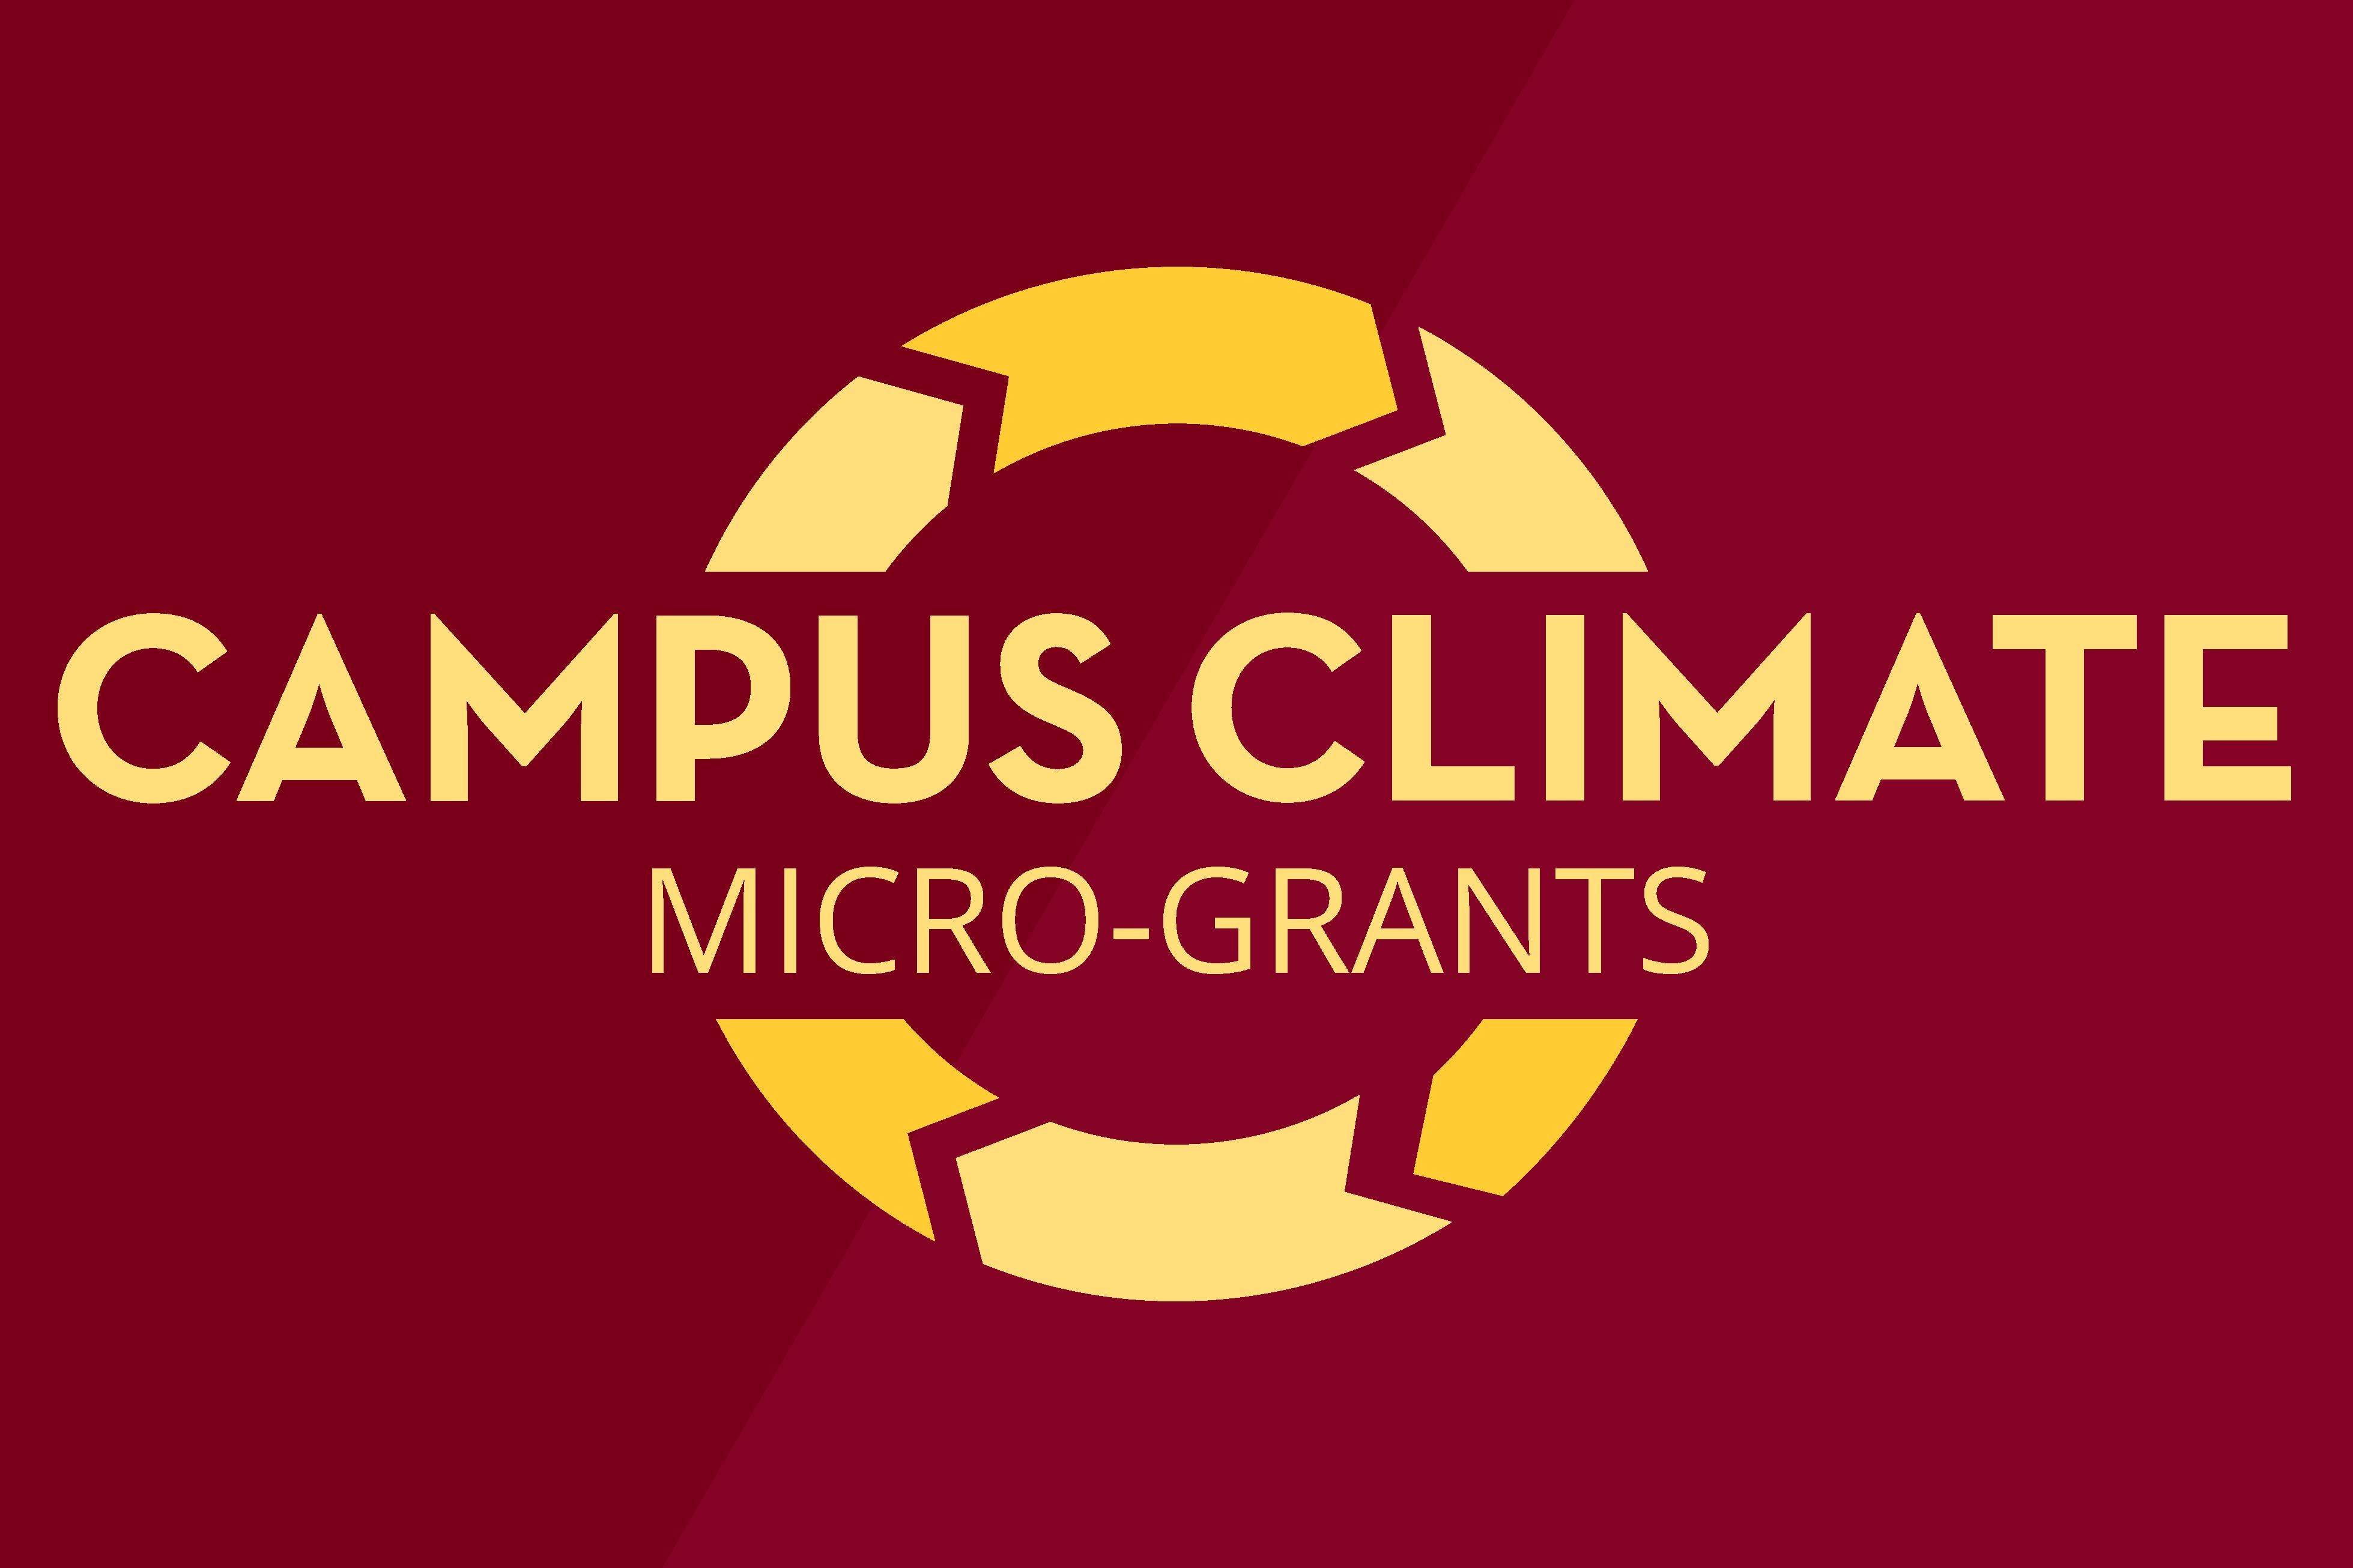 Campus Climate Micro-grants